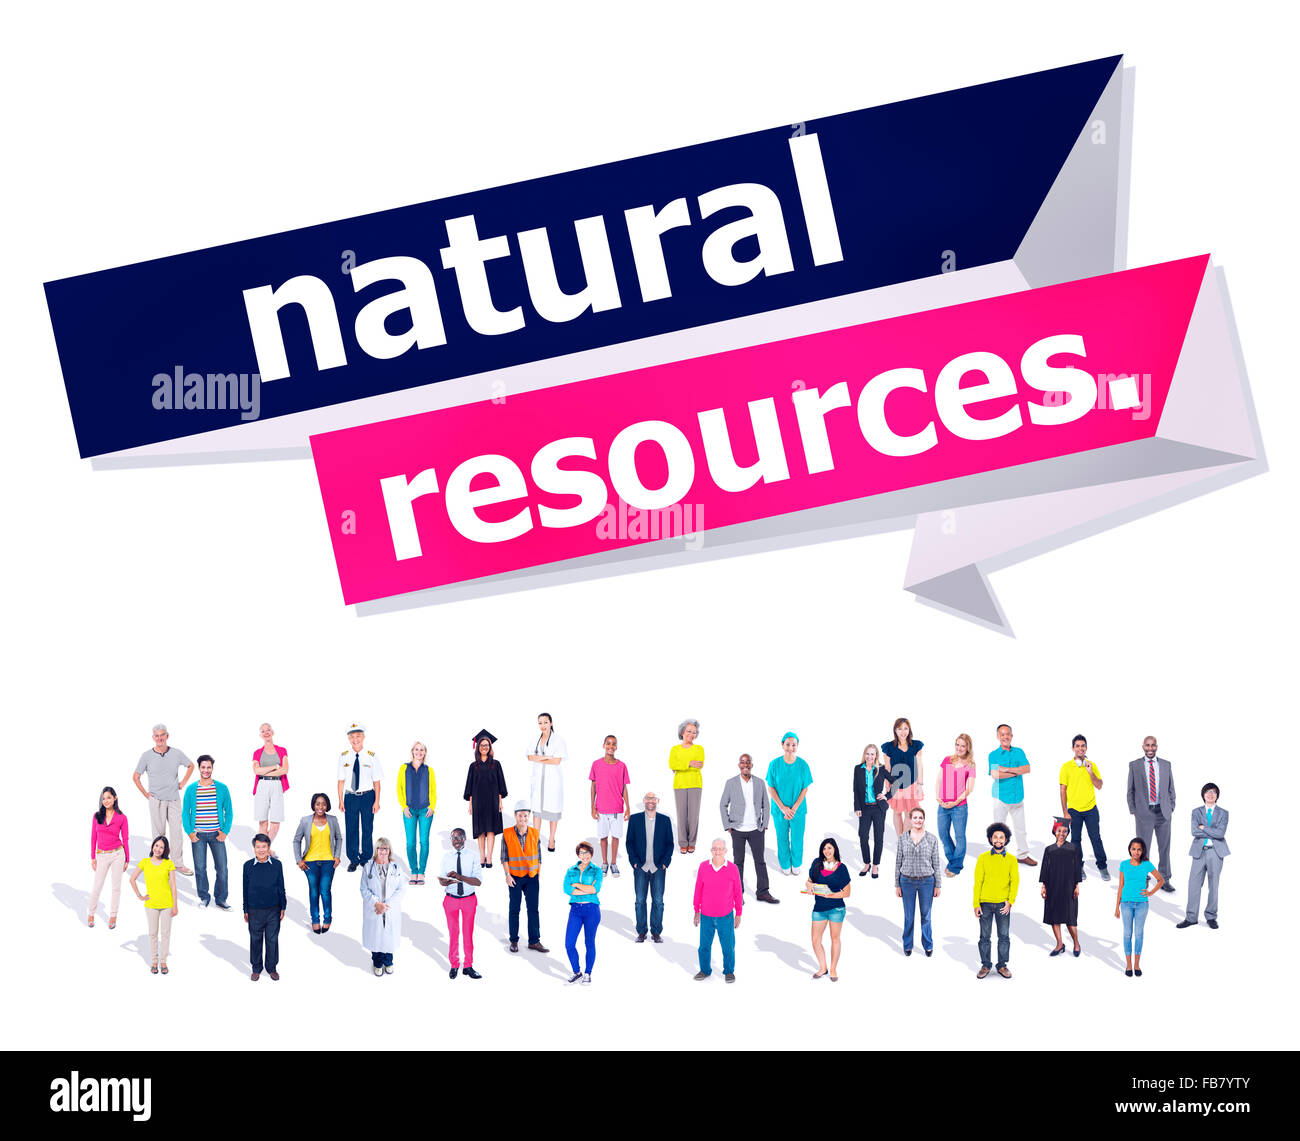 Natural Resources Environmental Earth Energy Concept Stock Photo